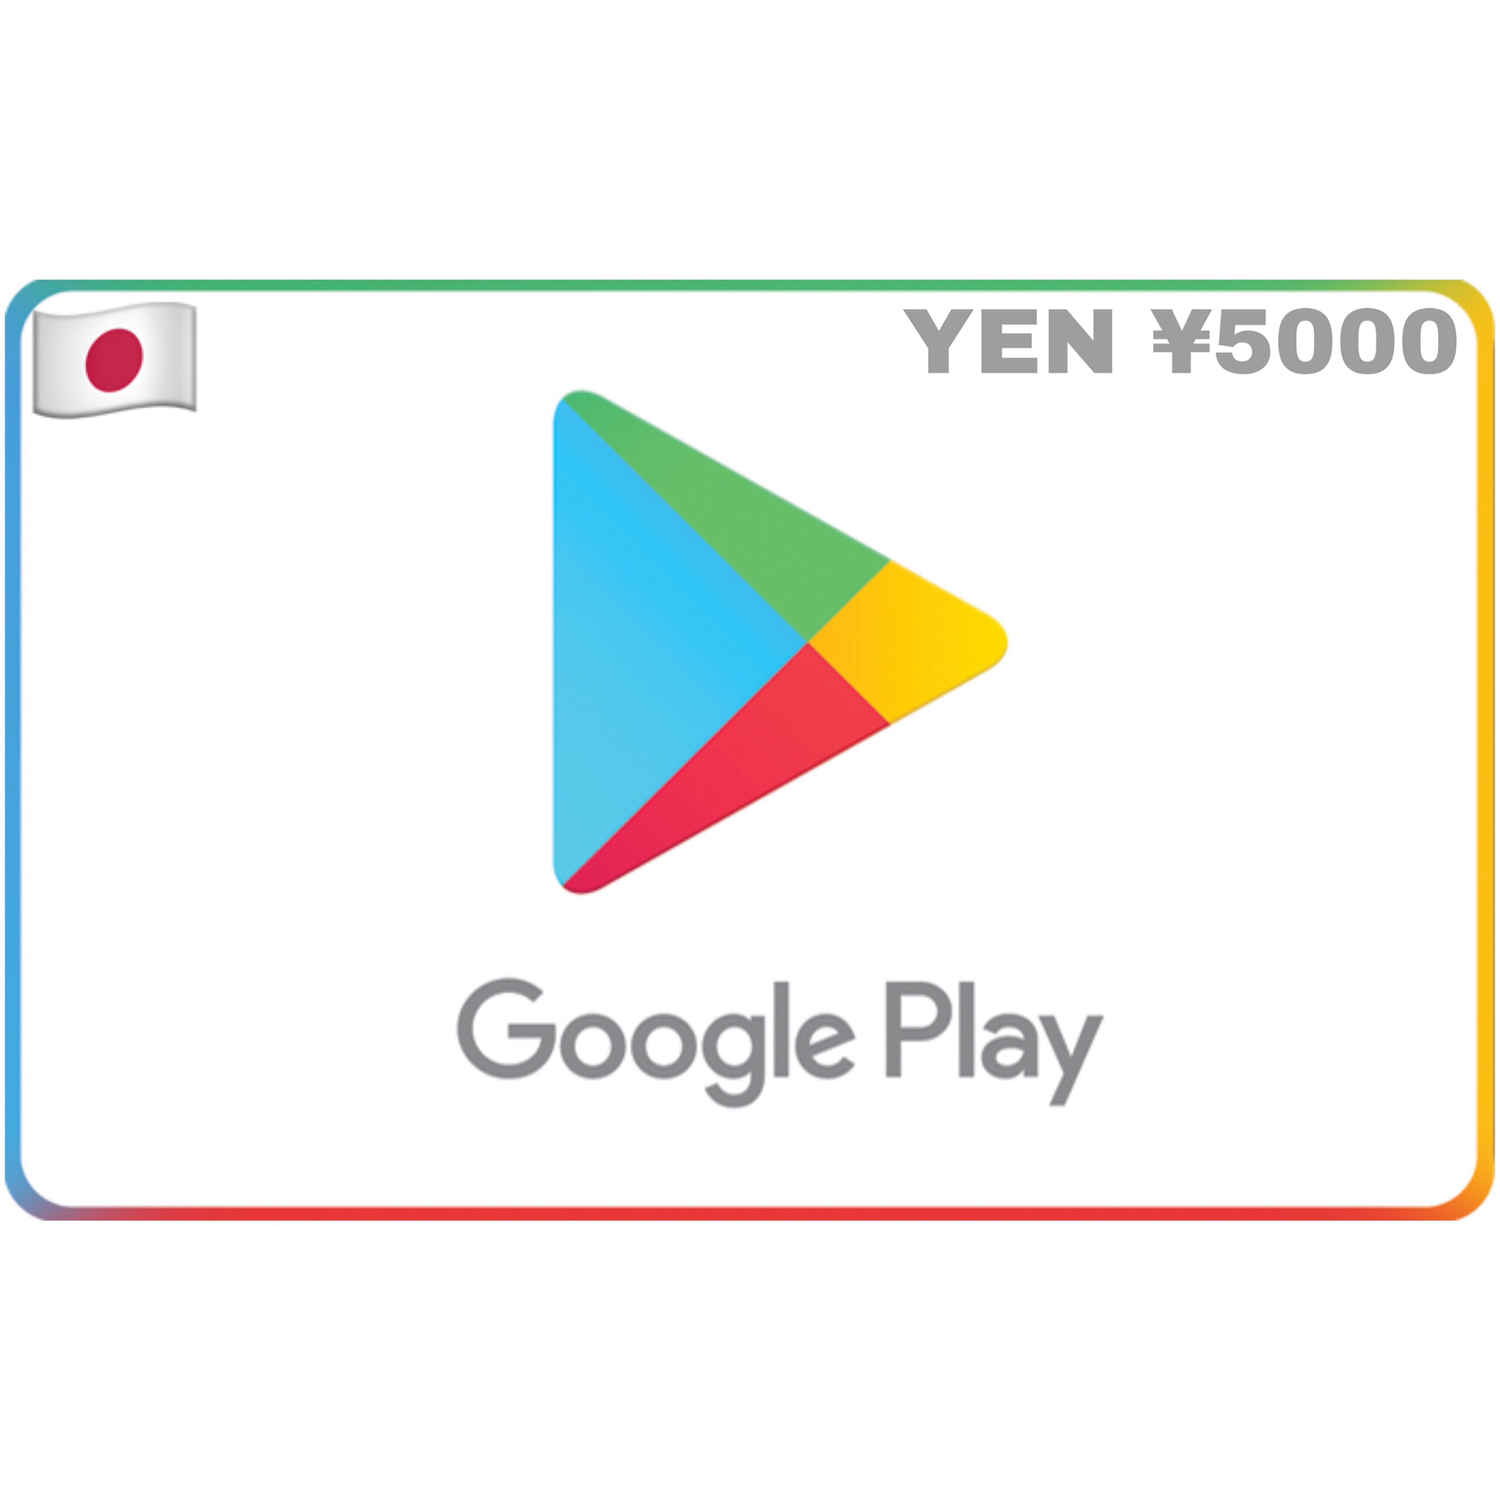 Google Play Japan ¥5000 YEN